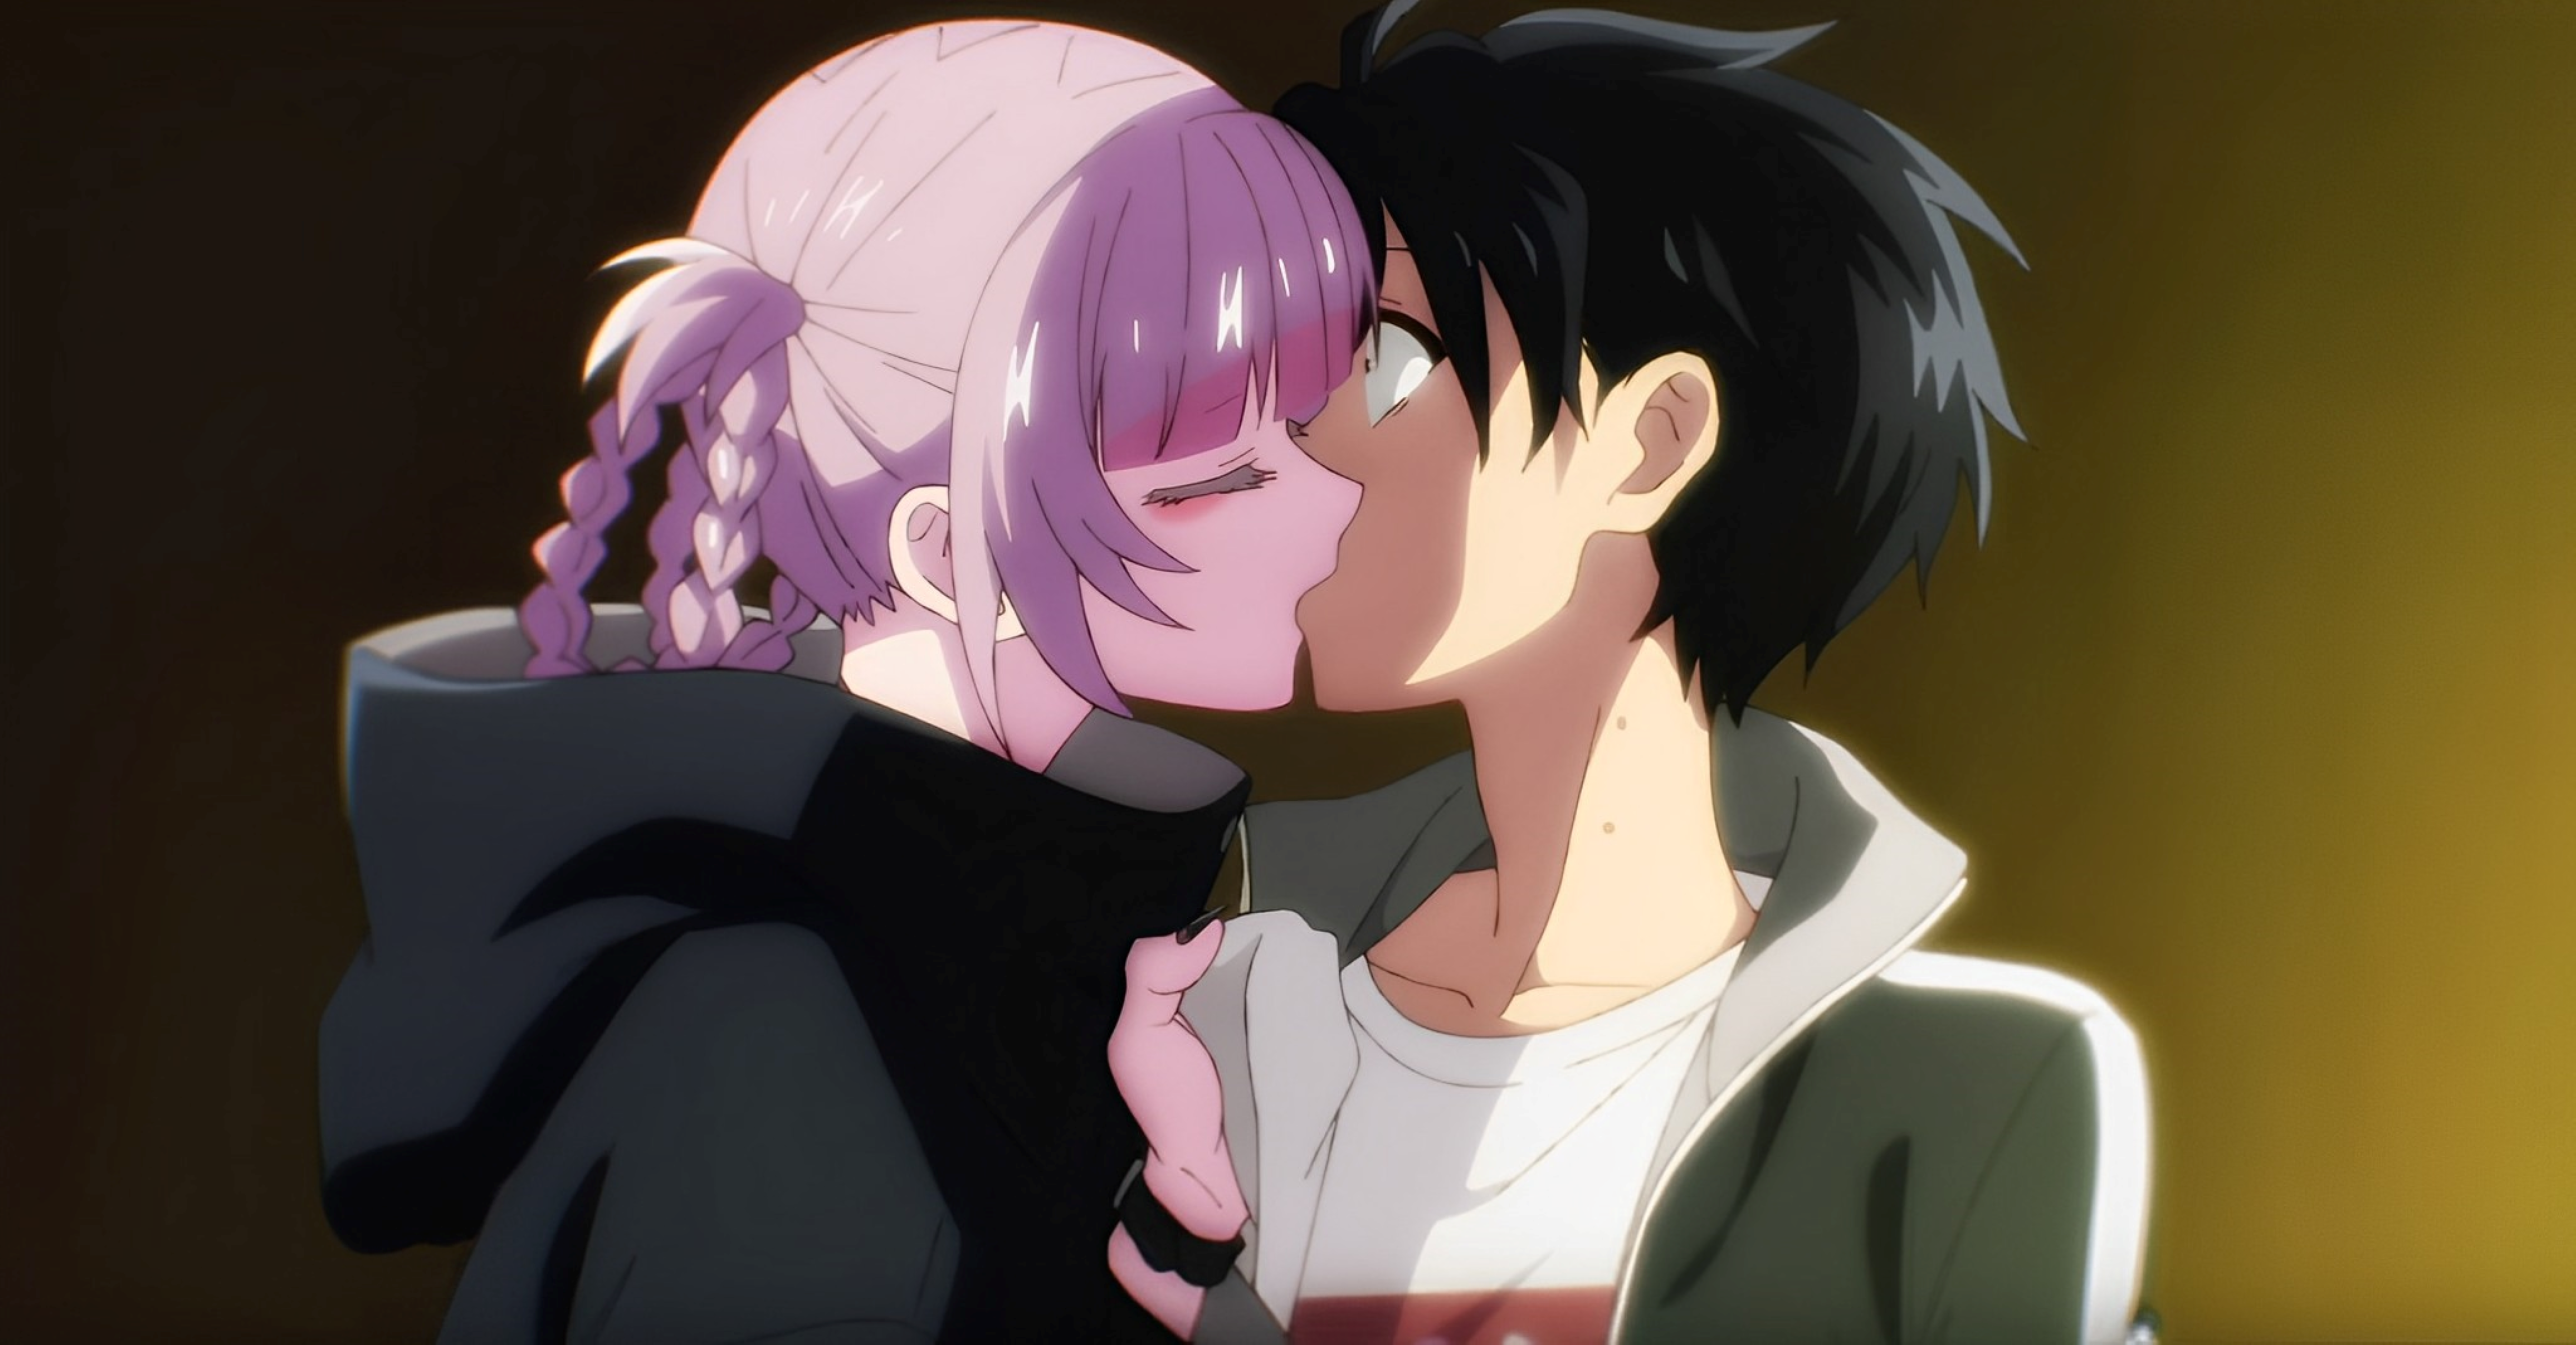 Anime 7663x4000 call of night manga kissing surprised closed eyes anime anime girls anime boys Anime screenshot simple background minimalism